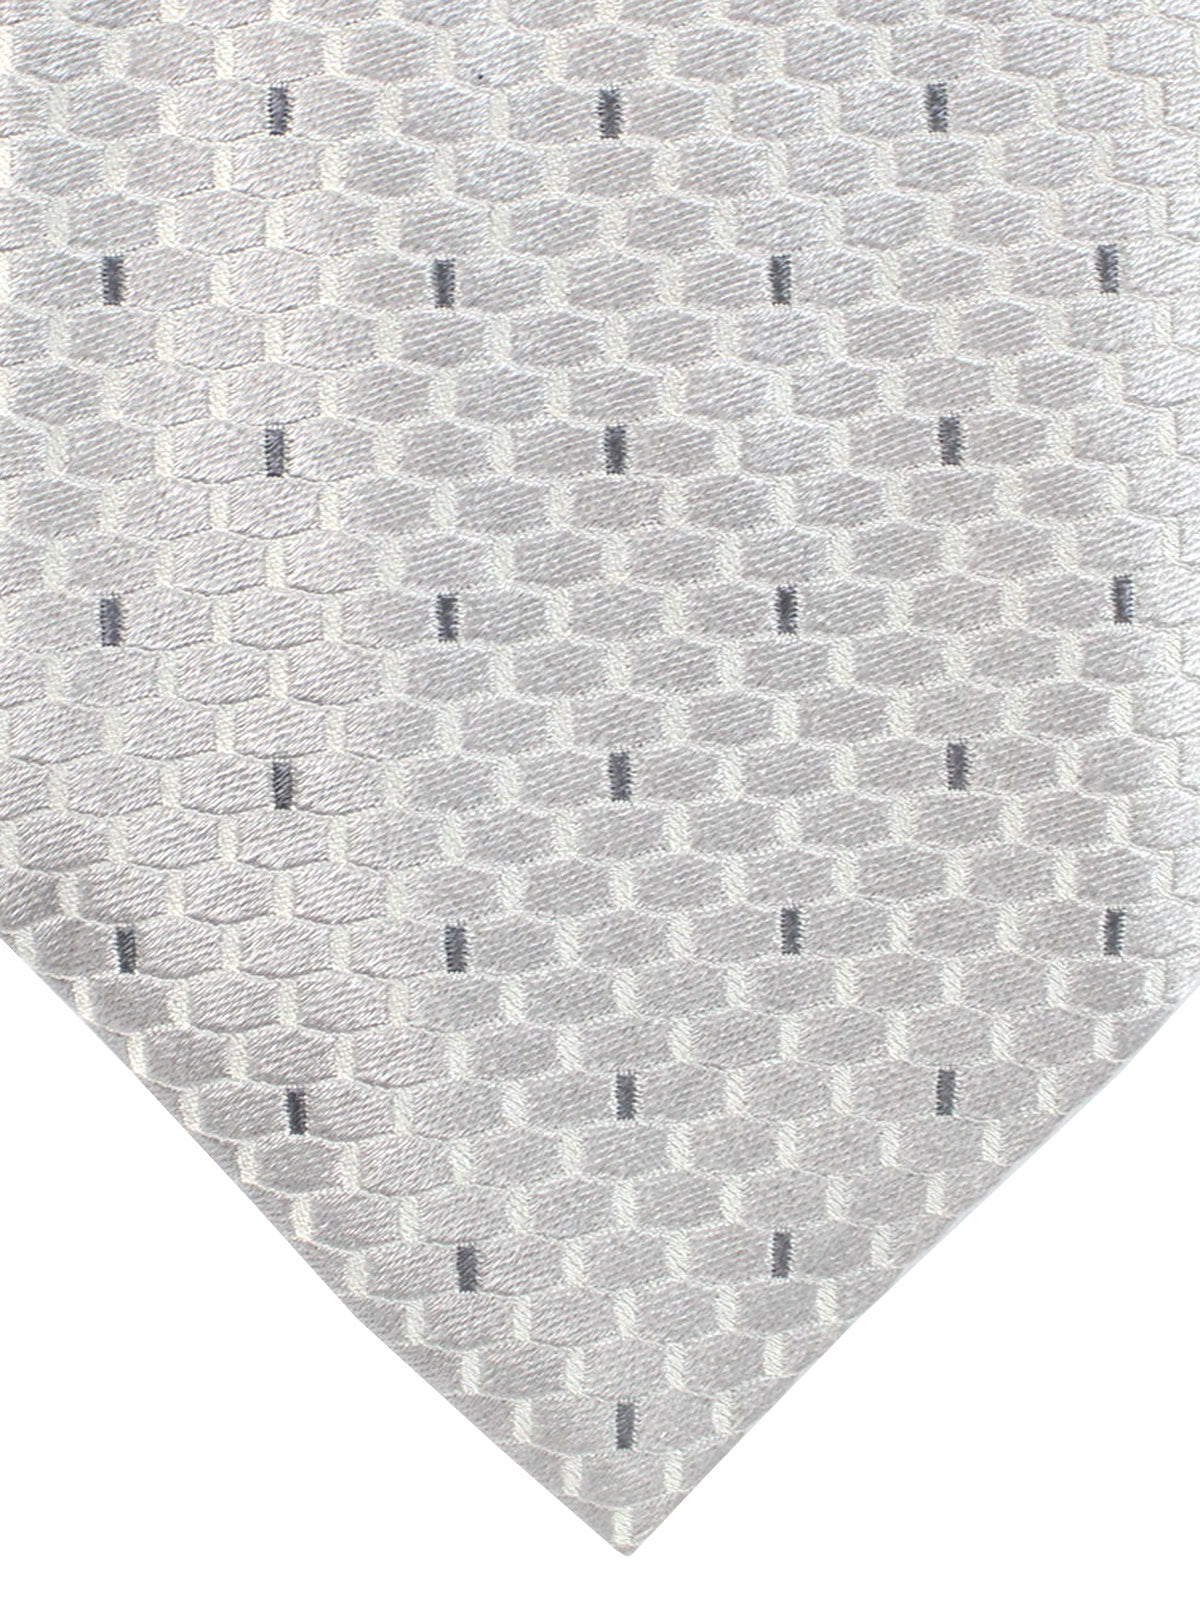 Louis Vuitton Diamonds V Tie